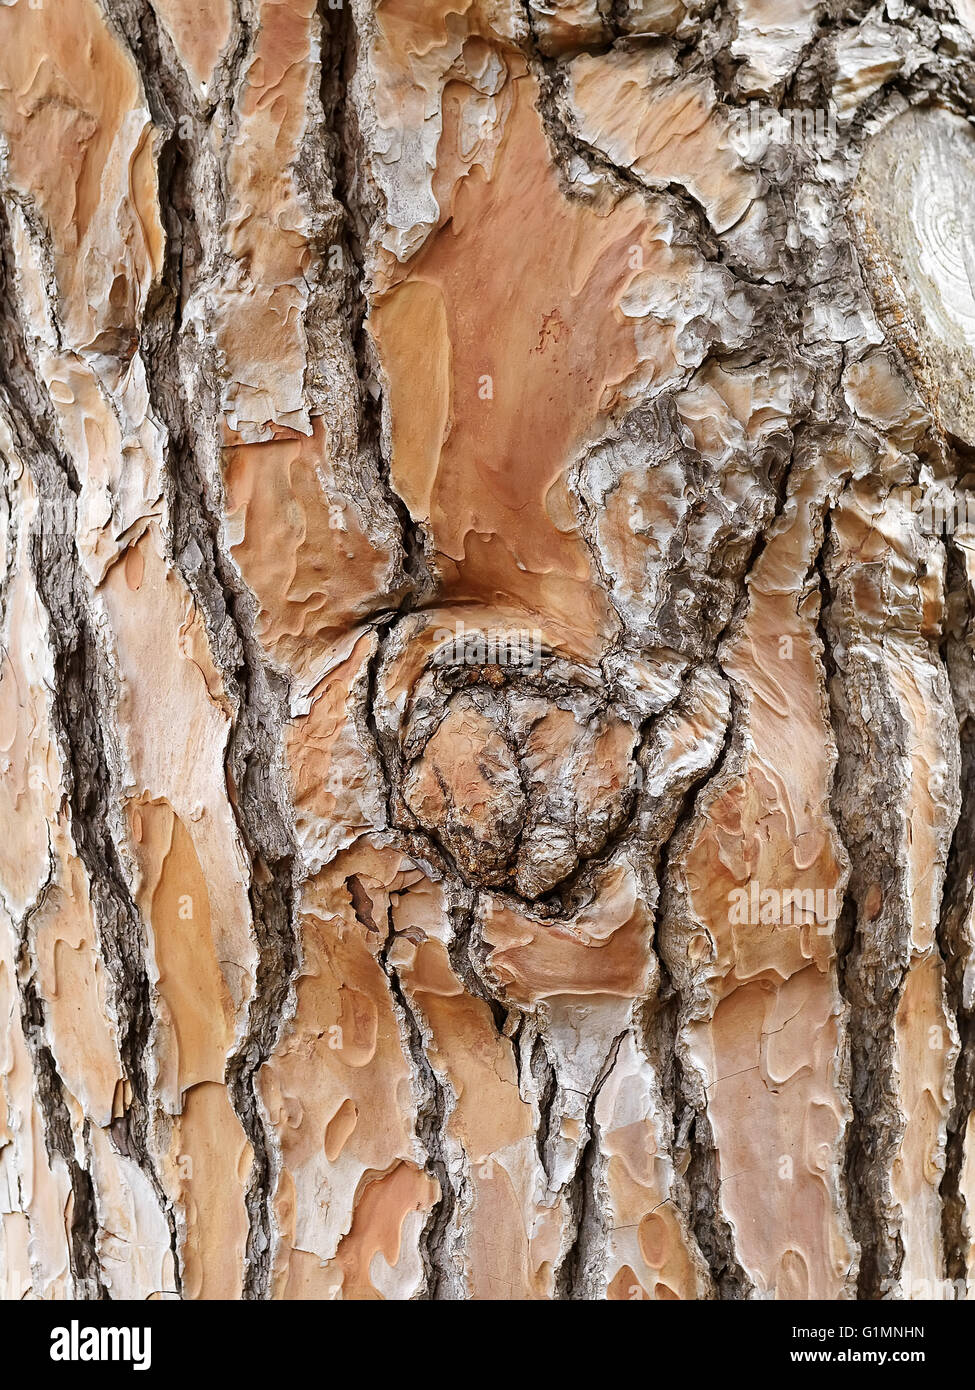 detail of pine tree wood skin texture Stock Photo